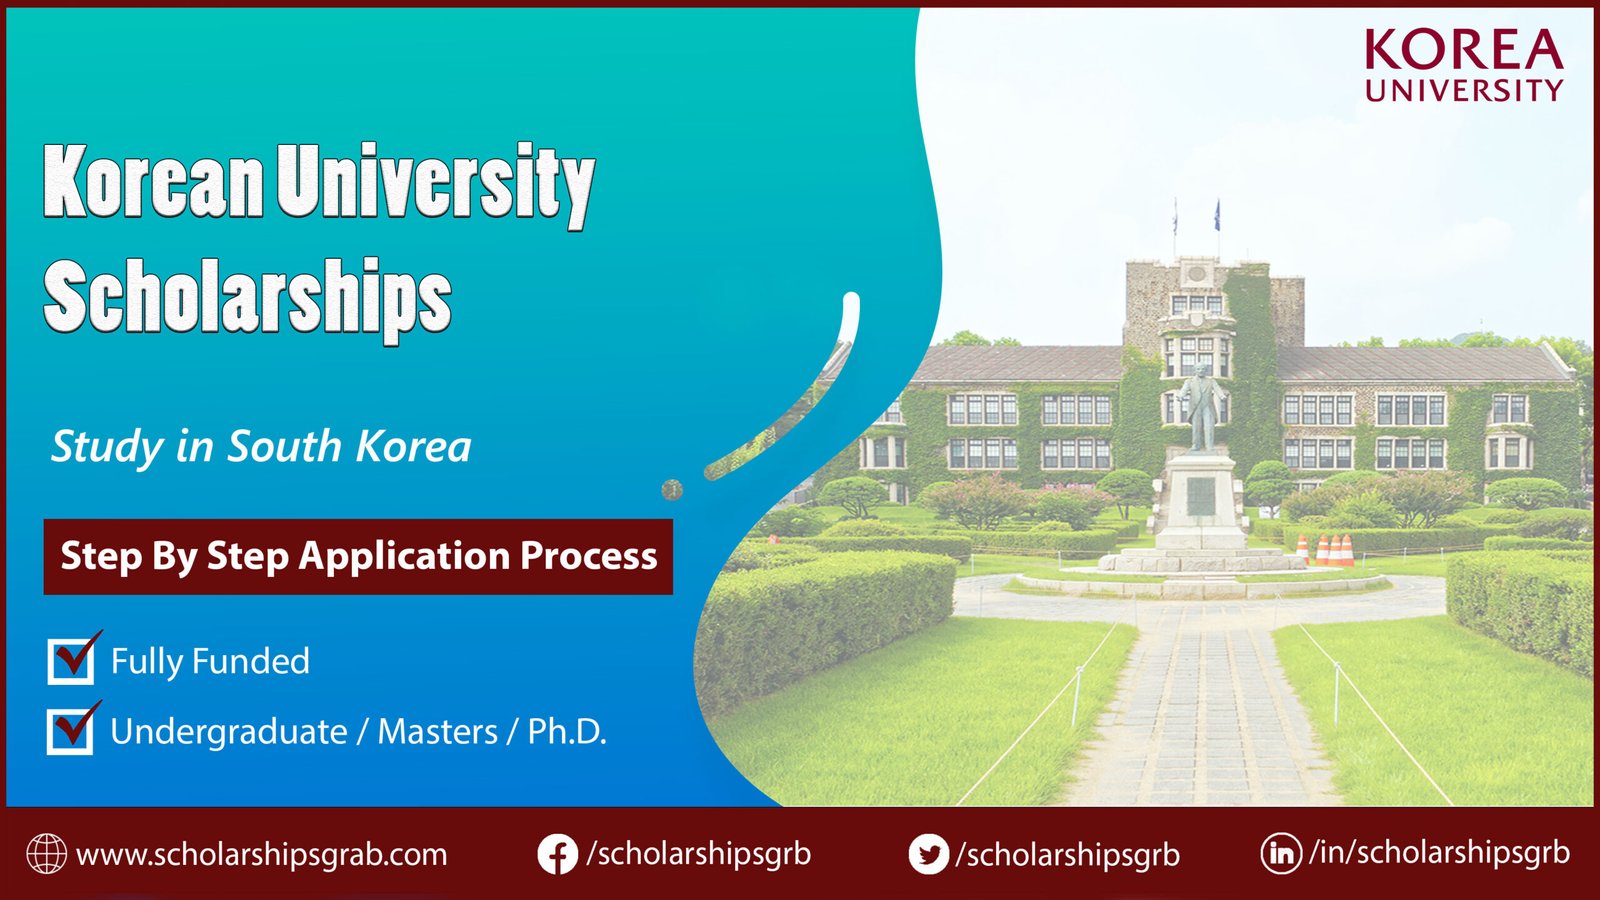 Korean University Scholarships